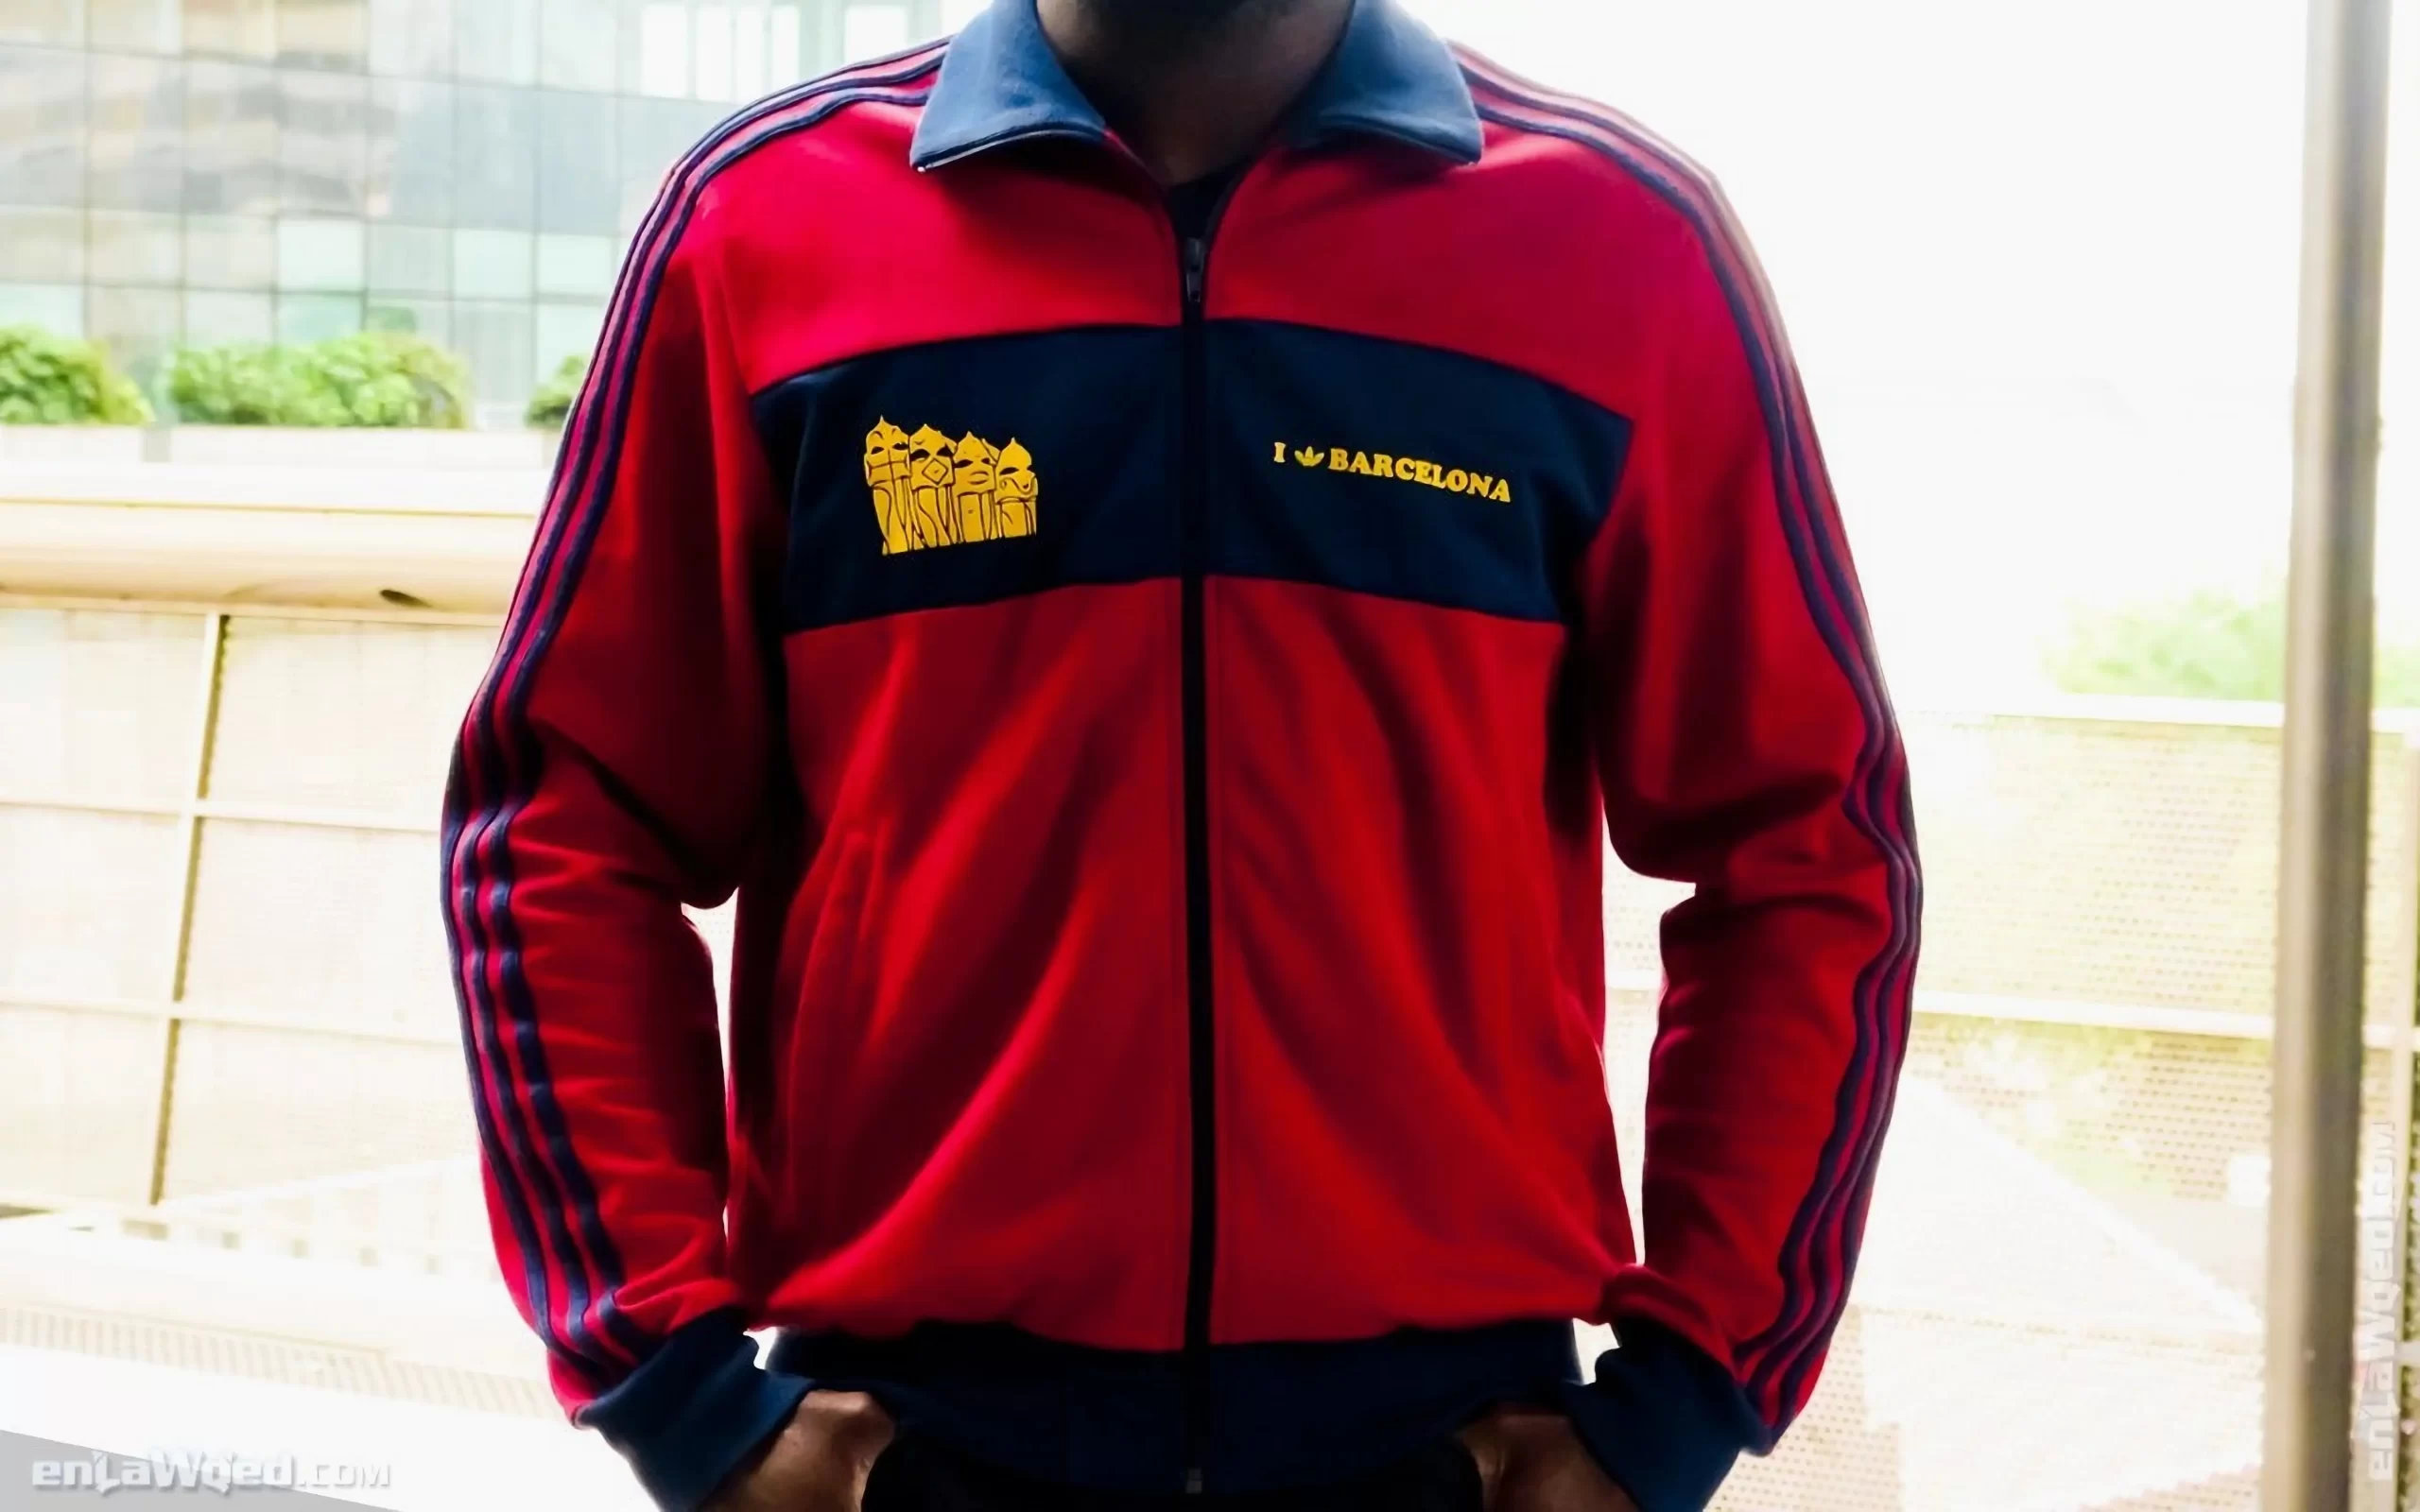 Men’s 2006 Barcelona TT-Two by Adidas Originals: Endorsed (EnLawded.com file #lmc55pqemm6cacywmt)